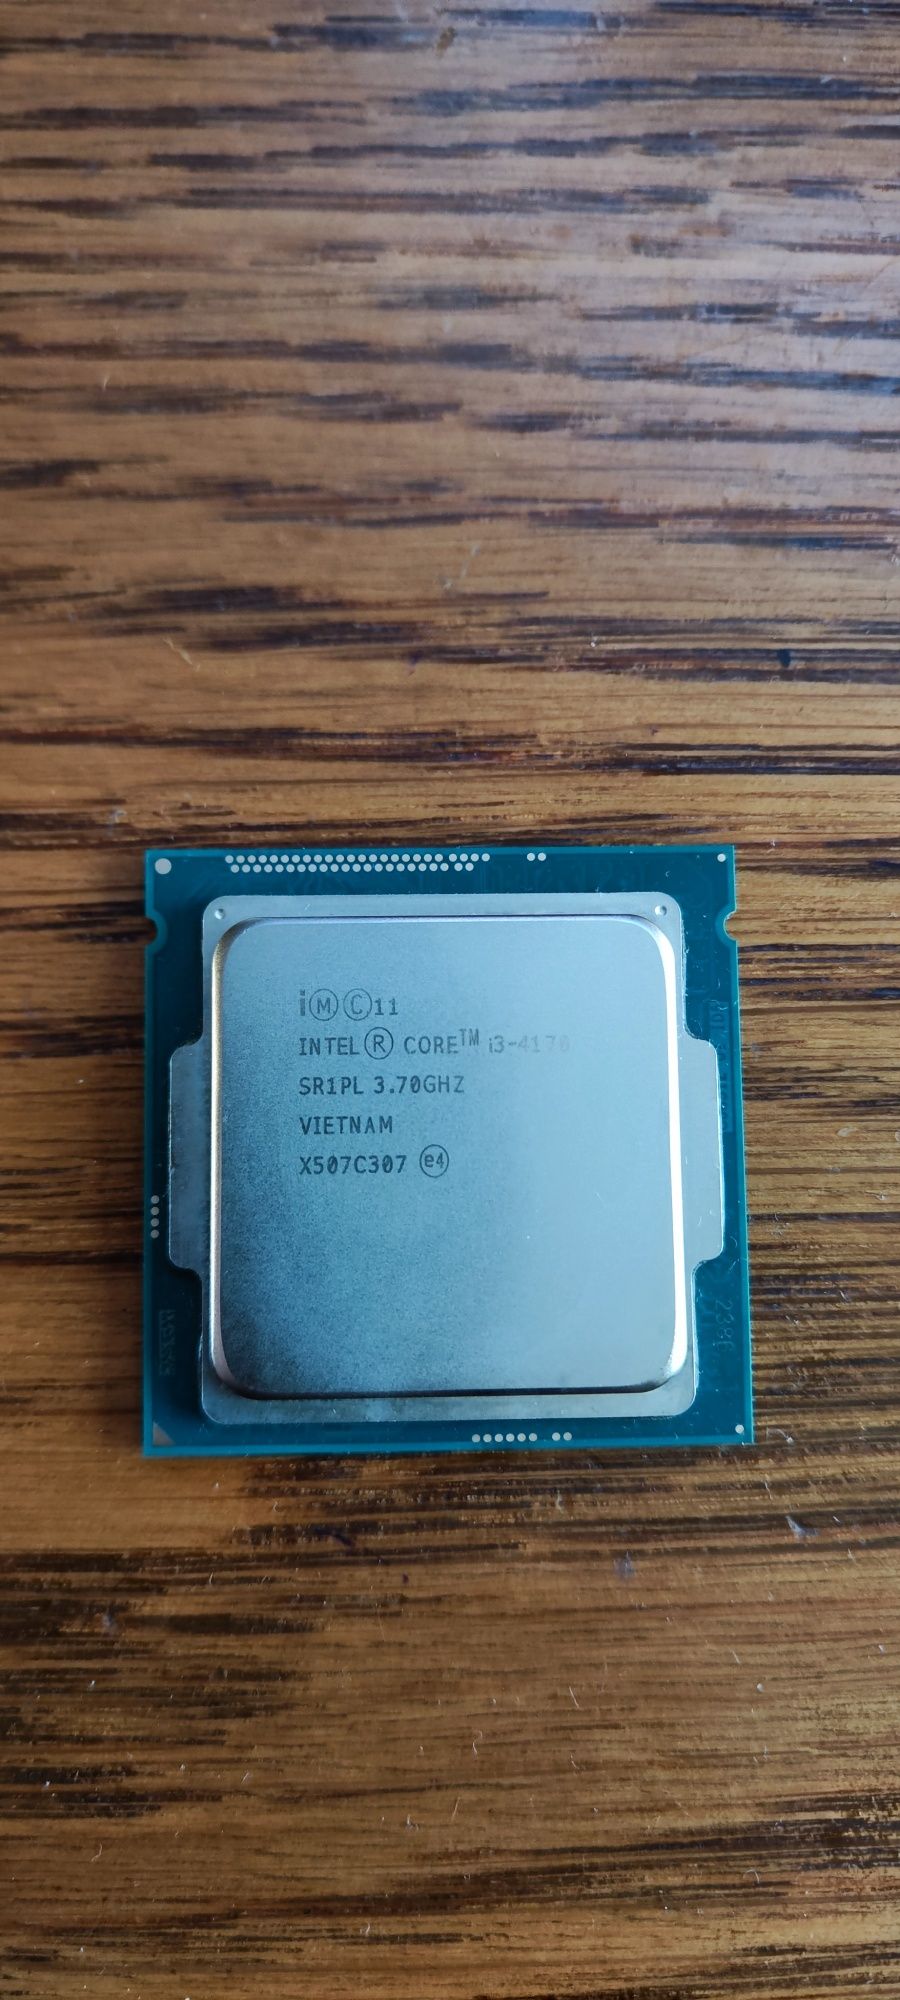 Intel core i3 4170 socket 1150 3.7ghz